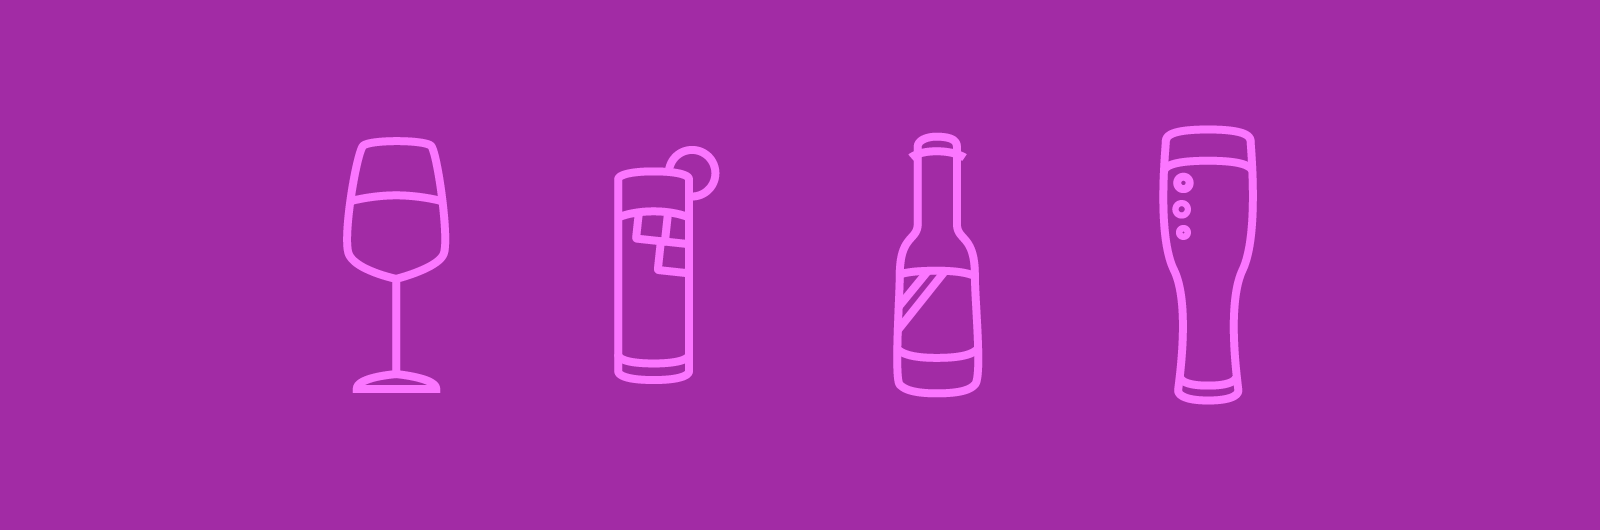 Icons designed for a cocktail menu